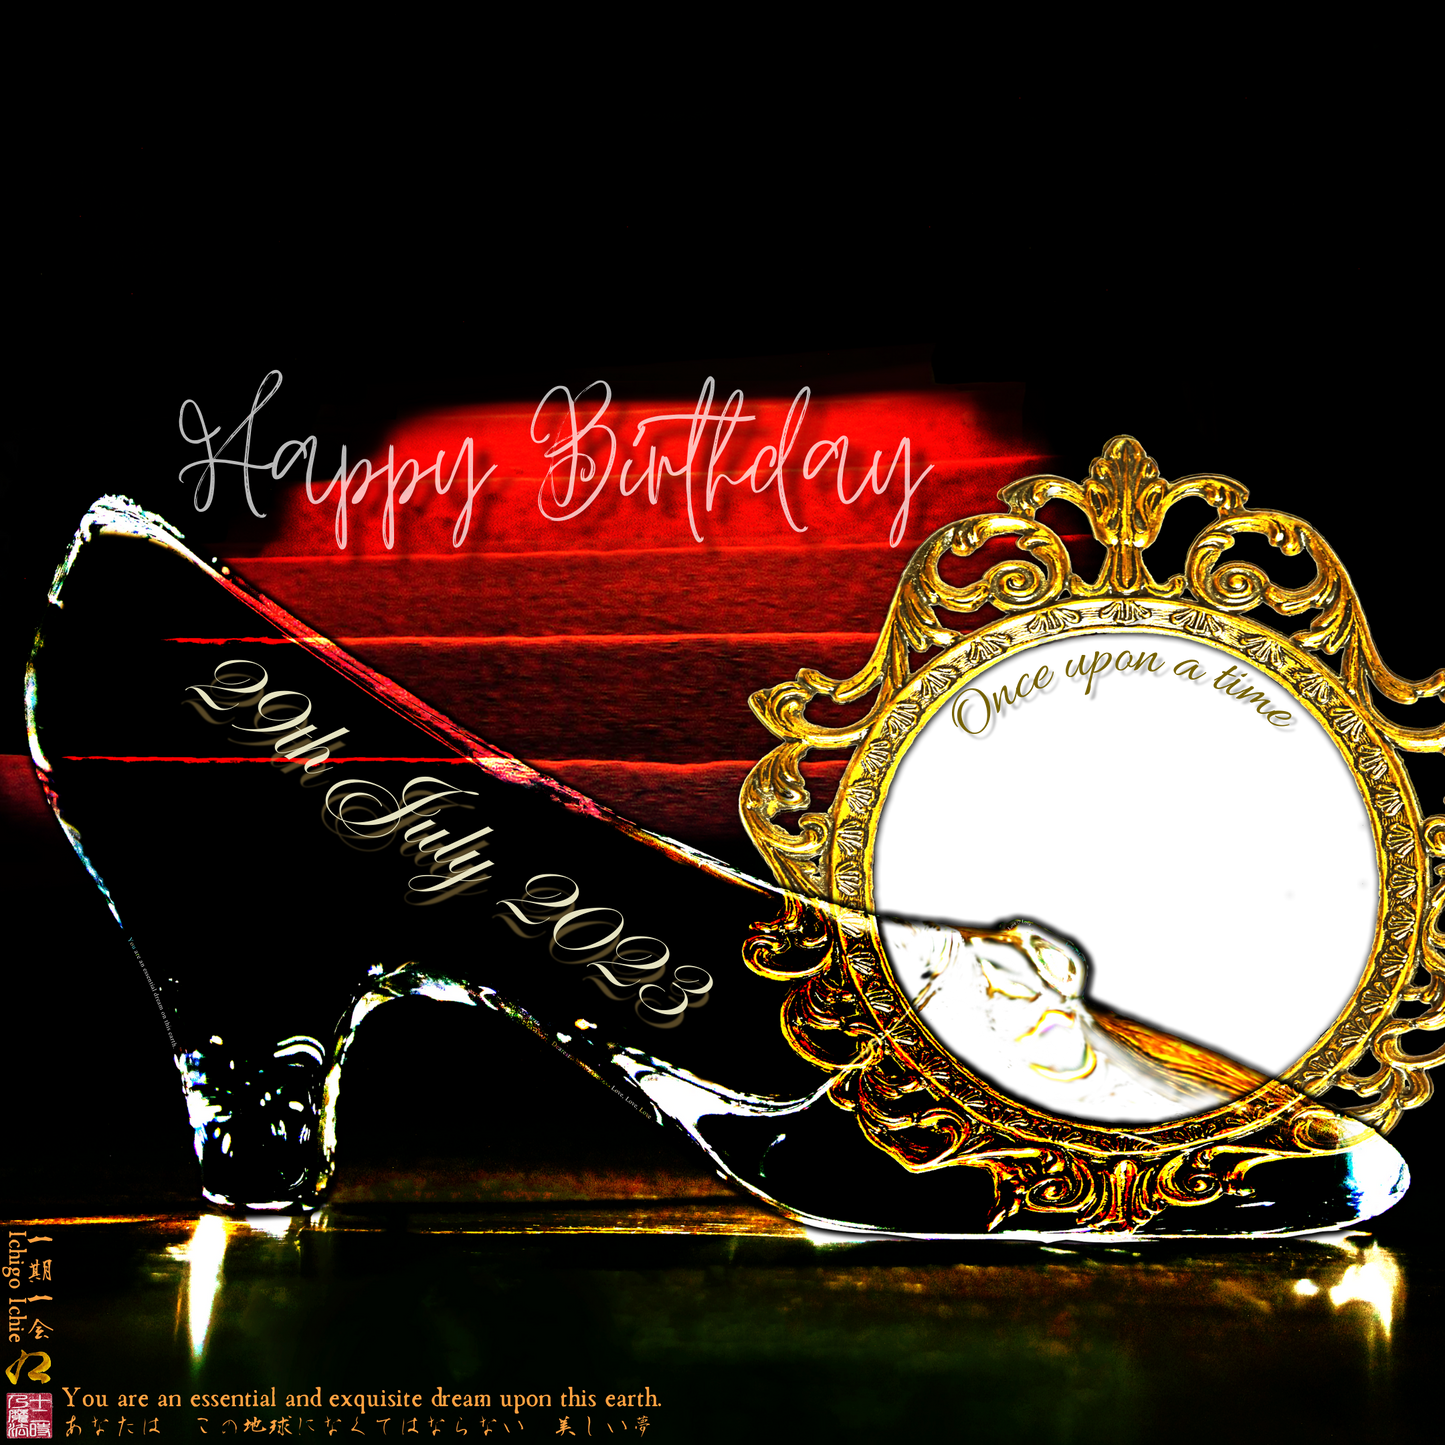 Happy Birthday Glass Slipper "Ichigo Ichie" 29th July 2023 the Right (1-of-1) NFT Art